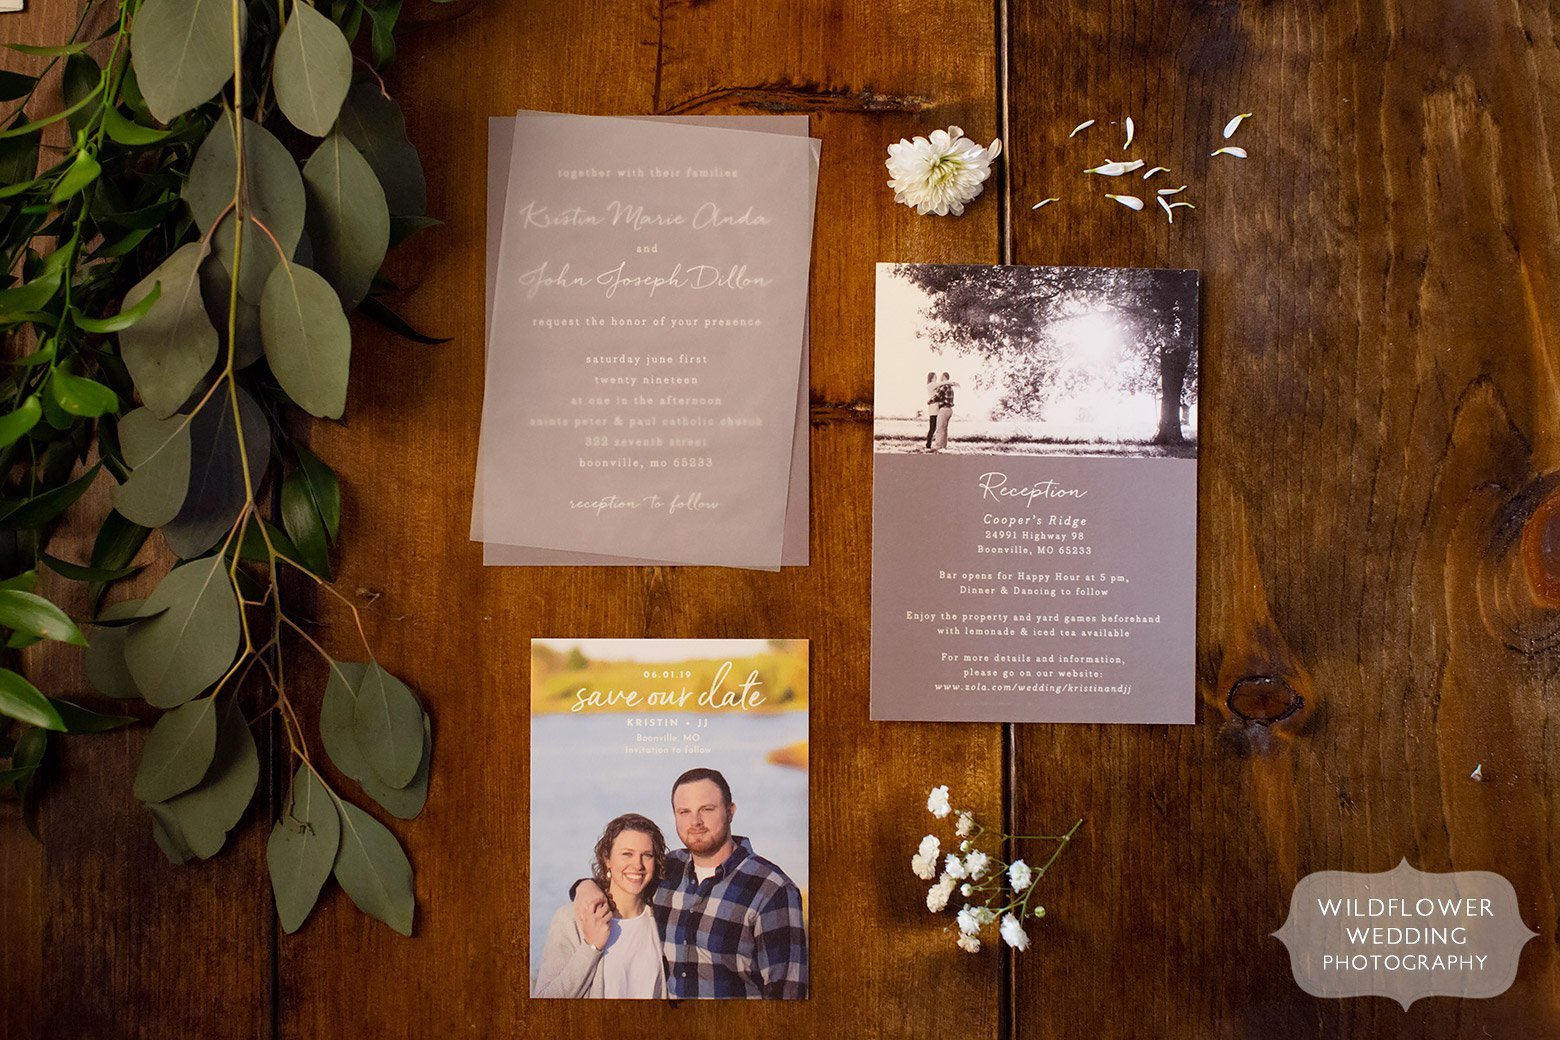 Cooper's Ridge wedding invitations on farm table.